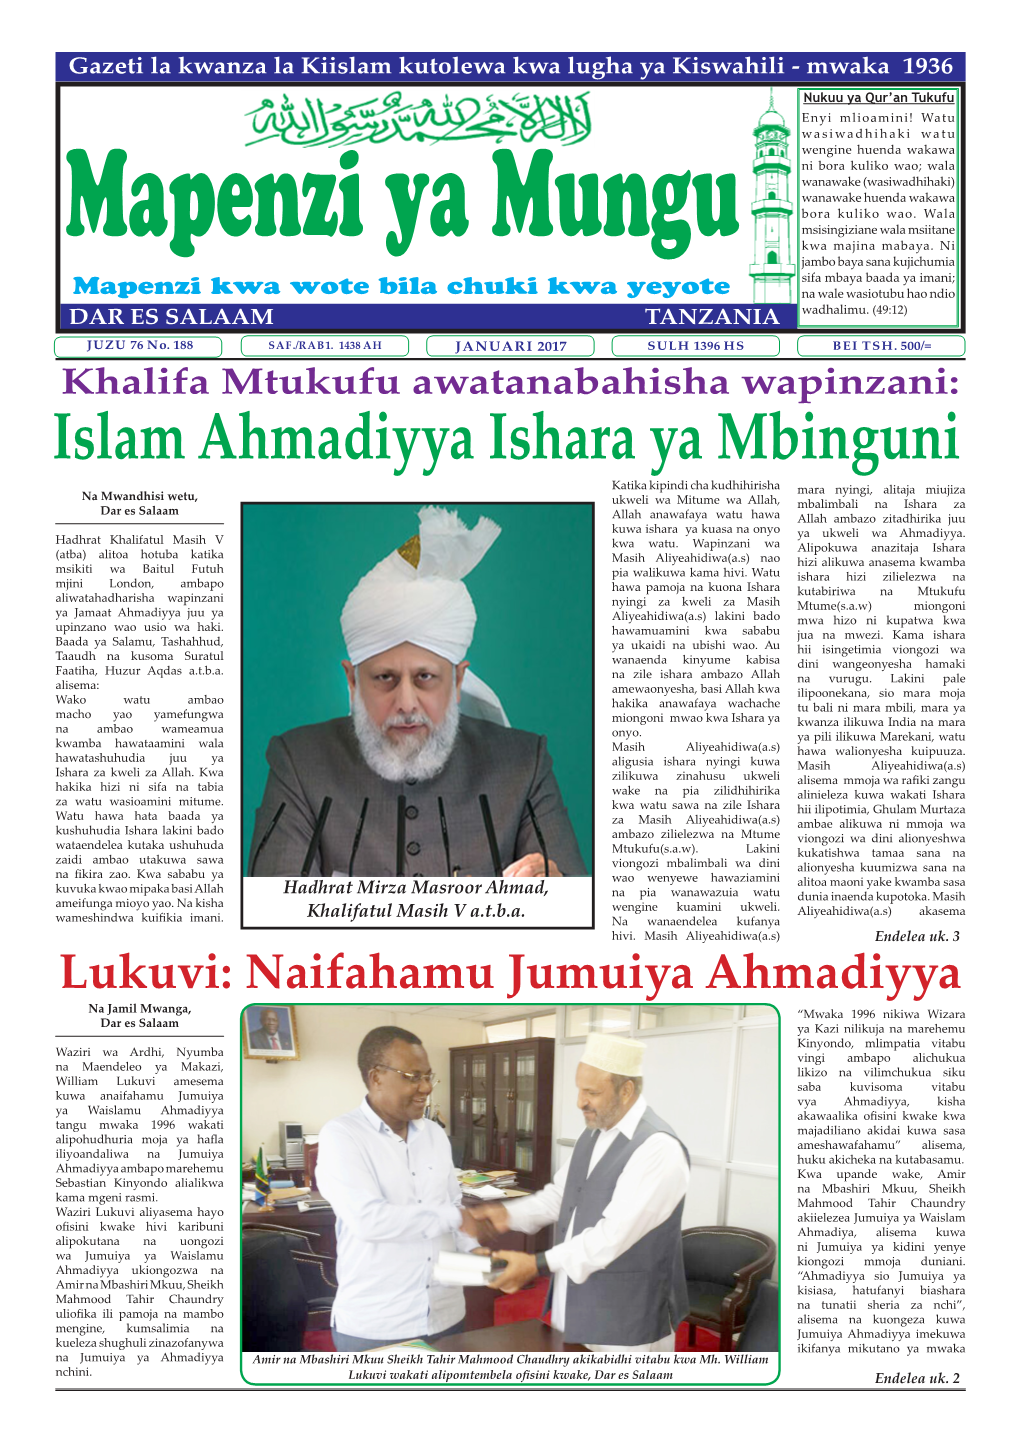 Islam Ahmadiyya Ishara Ya Mbinguni